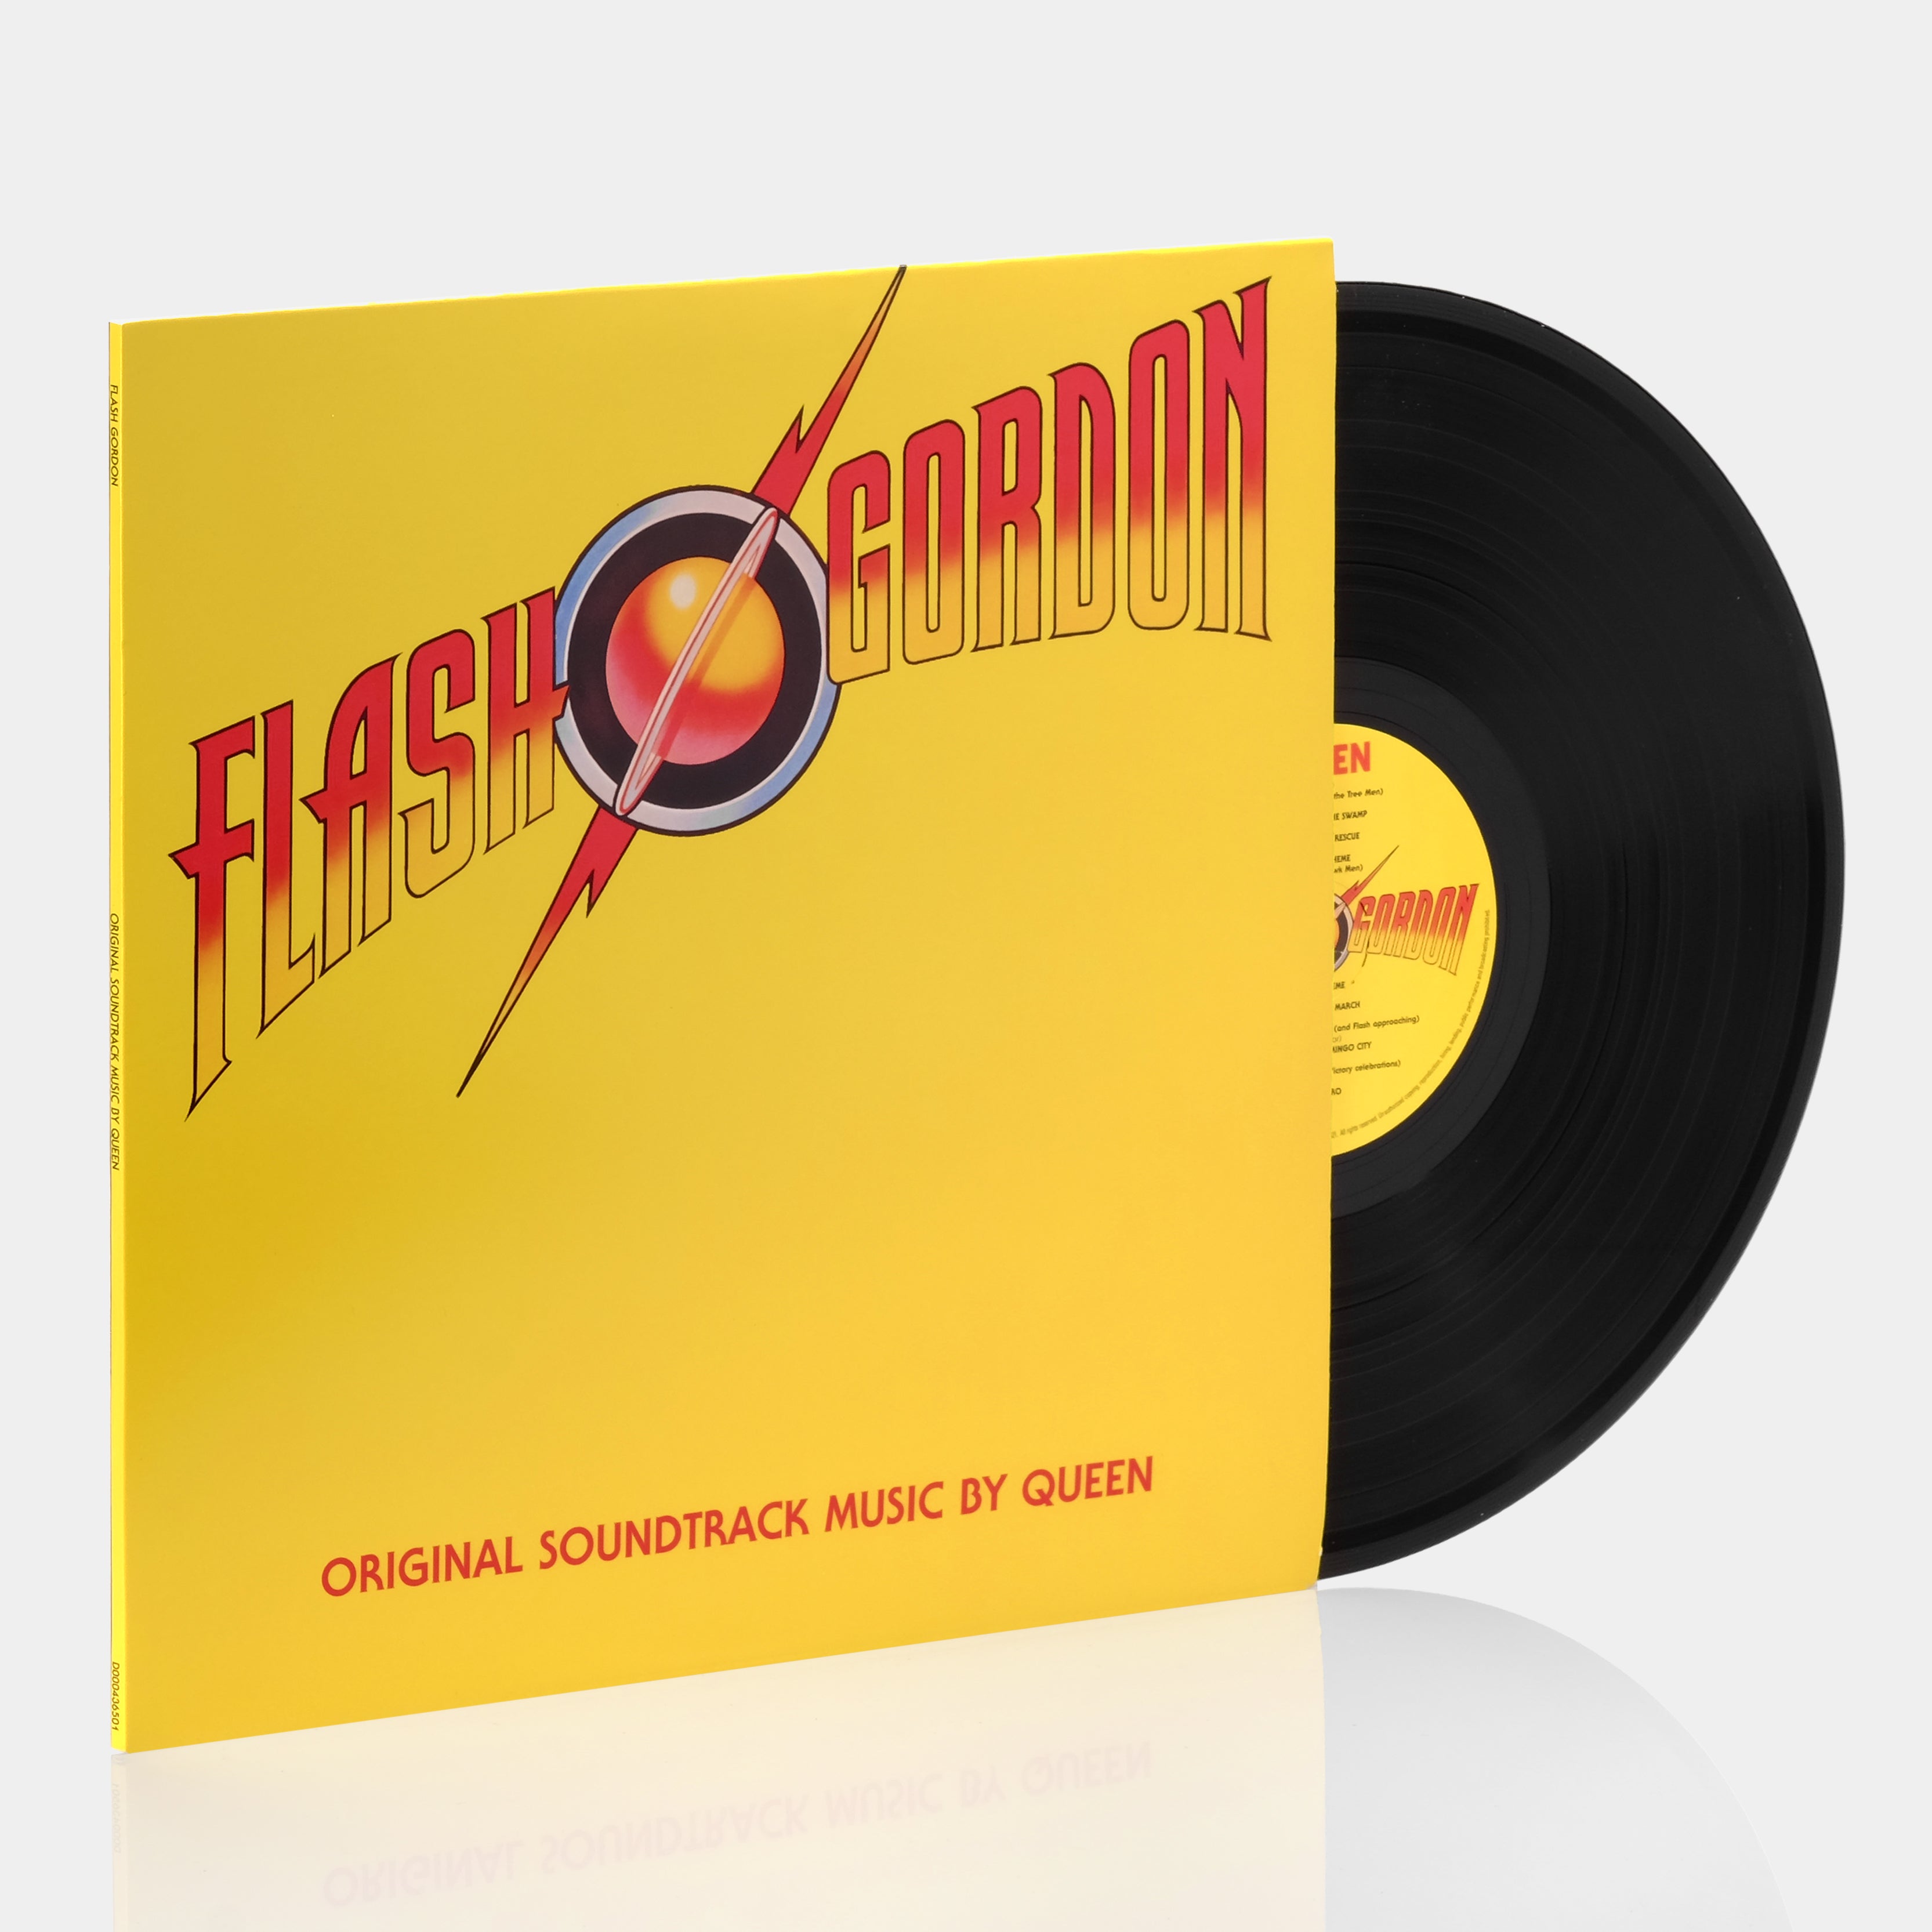 Queen - Flash Gordon (Original Soundtrack Music) LP Vinyl Record